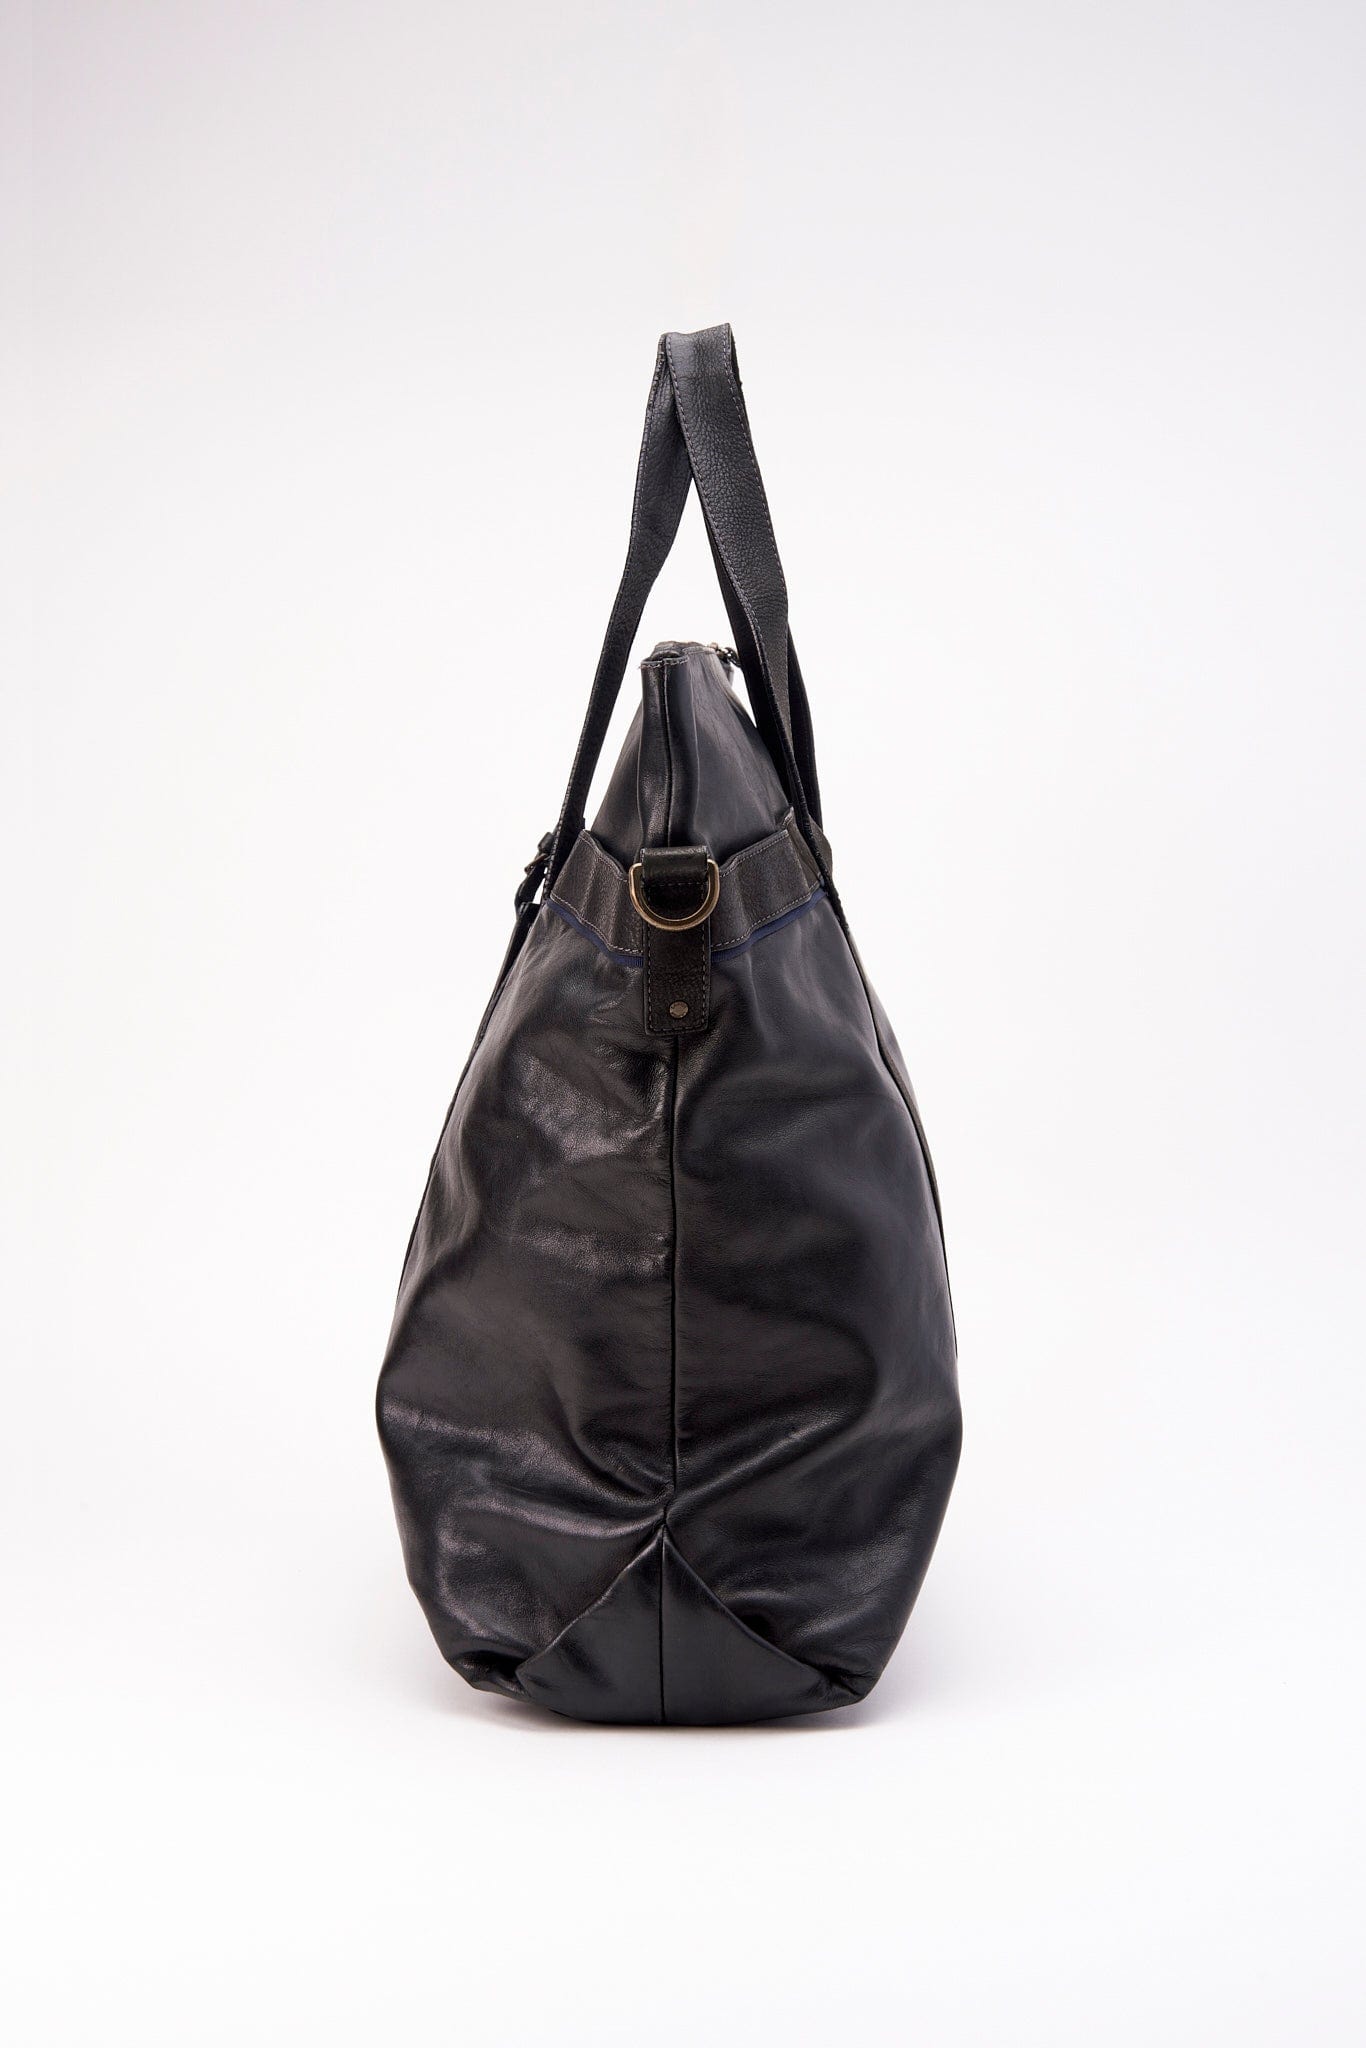 Lanvin Black Leather Tote Bag